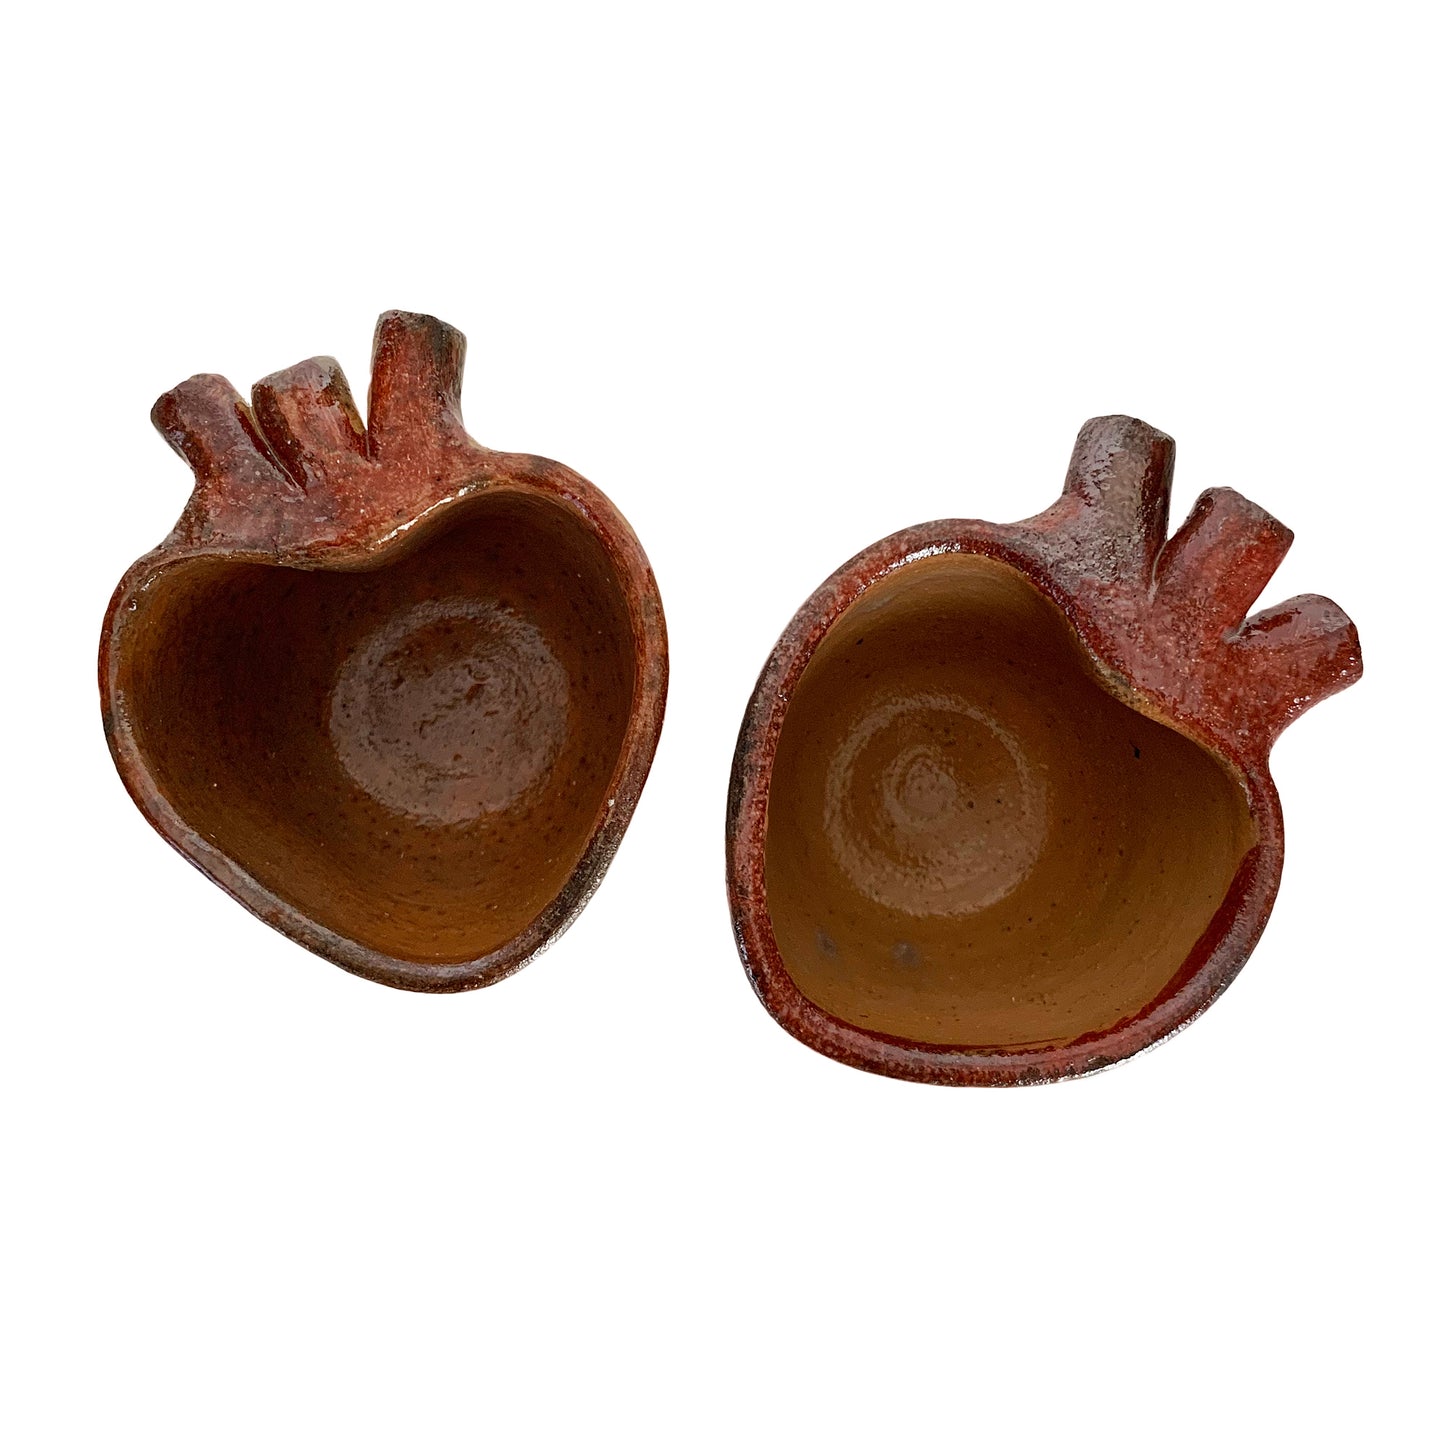 Bleeding Heart Mezcal or Tequila Cups | Mezcal Copitas | Clay Shot Glasses | Handmade in Oaxaca, Mexico | Set of 2